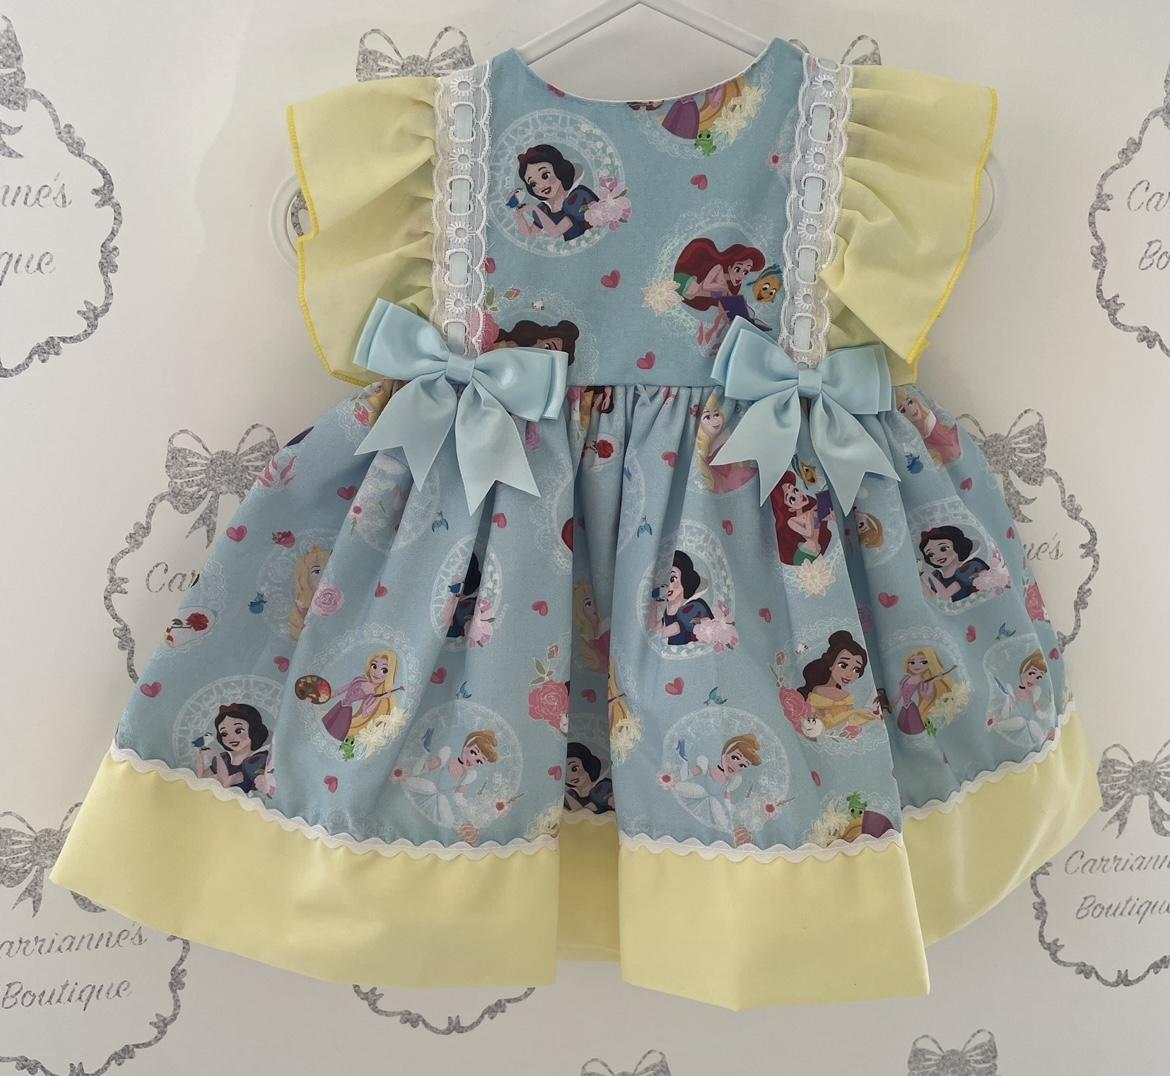 pleegouders biologie ramp Blue Princess Baby Dress - Carrianne's Boutique